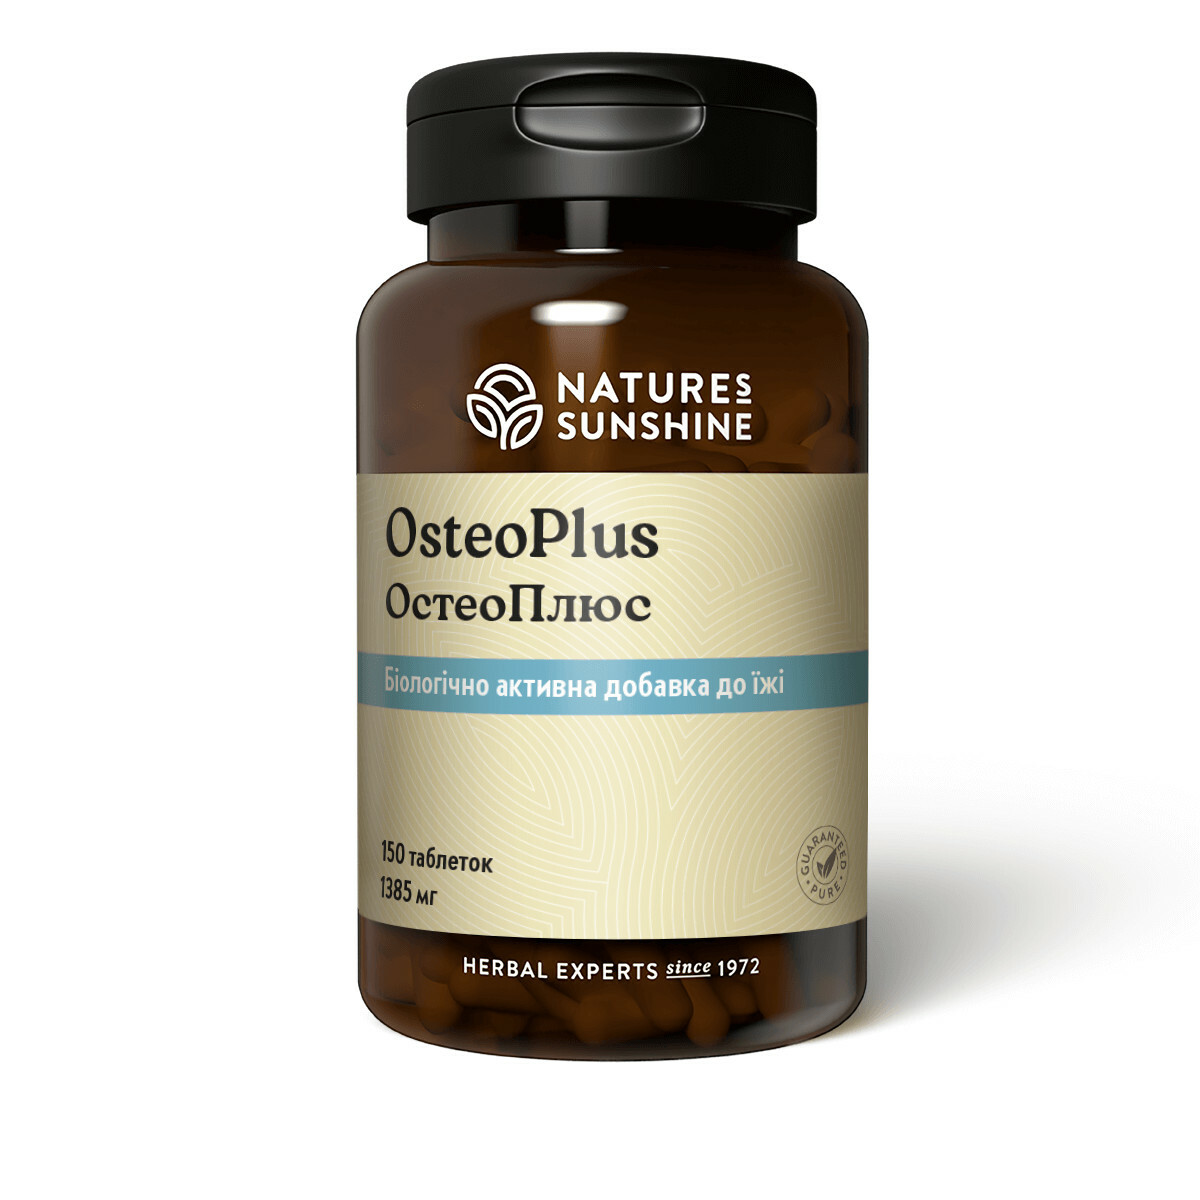 OsteoPlus - ОстеоПлюс - БАД Nature's Sunshine Products (NSP)